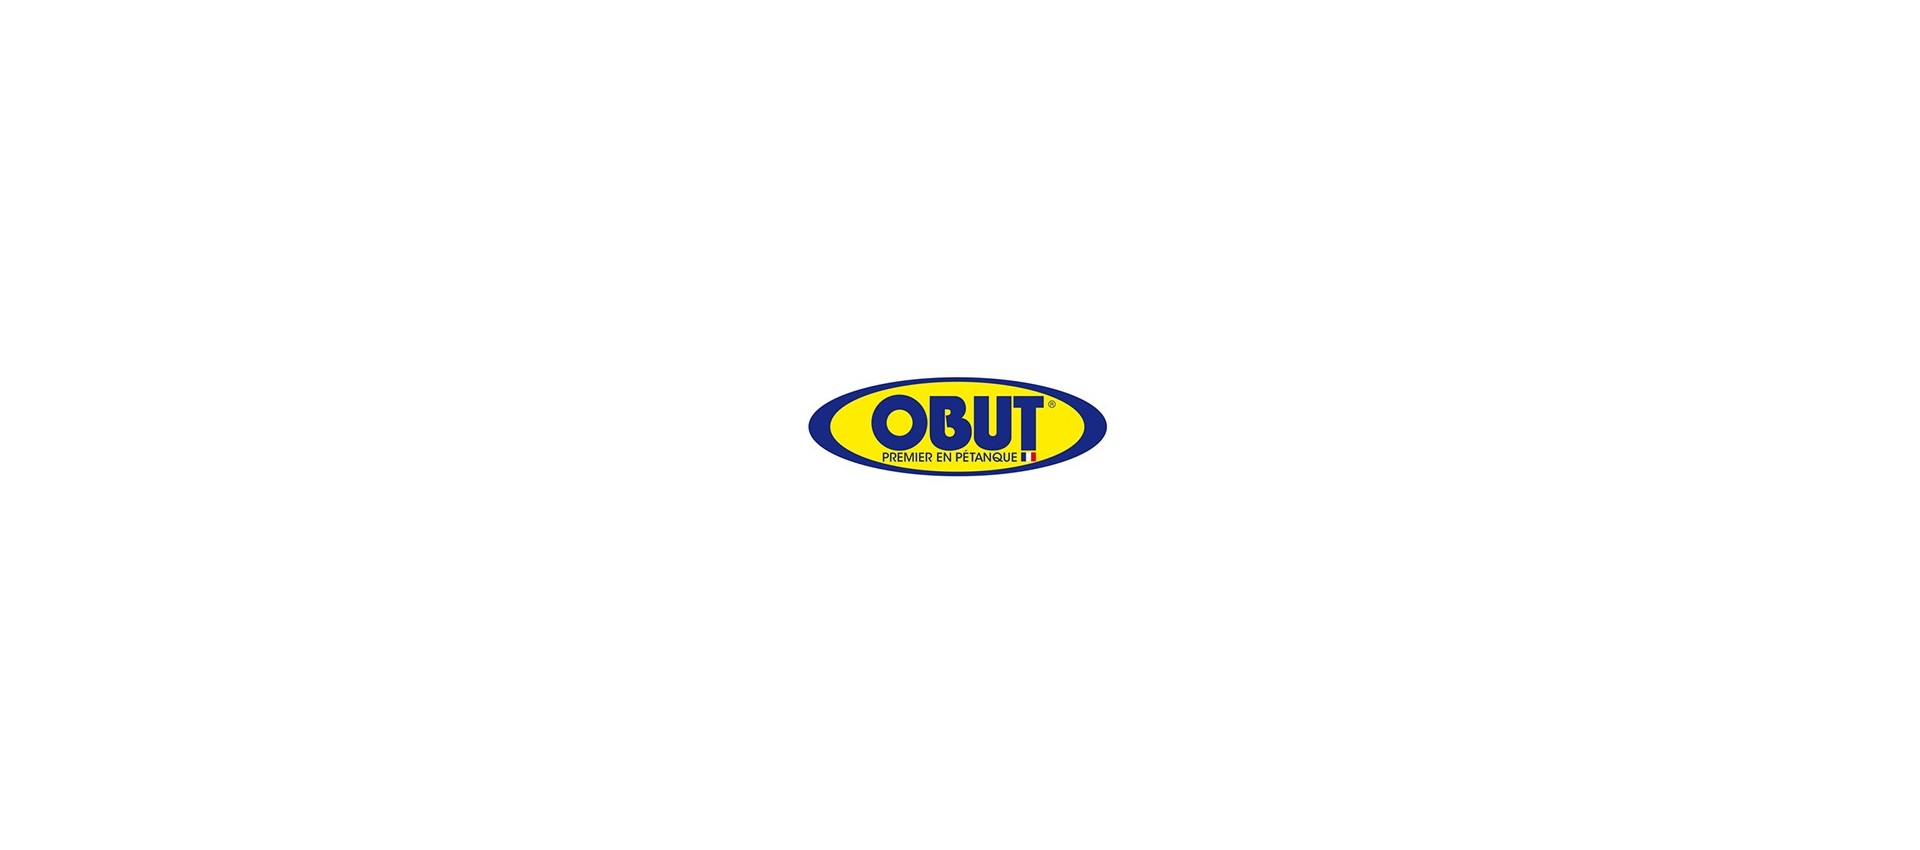 Vendita Boules Obut online a prezzi imbattibili, consegna veloce